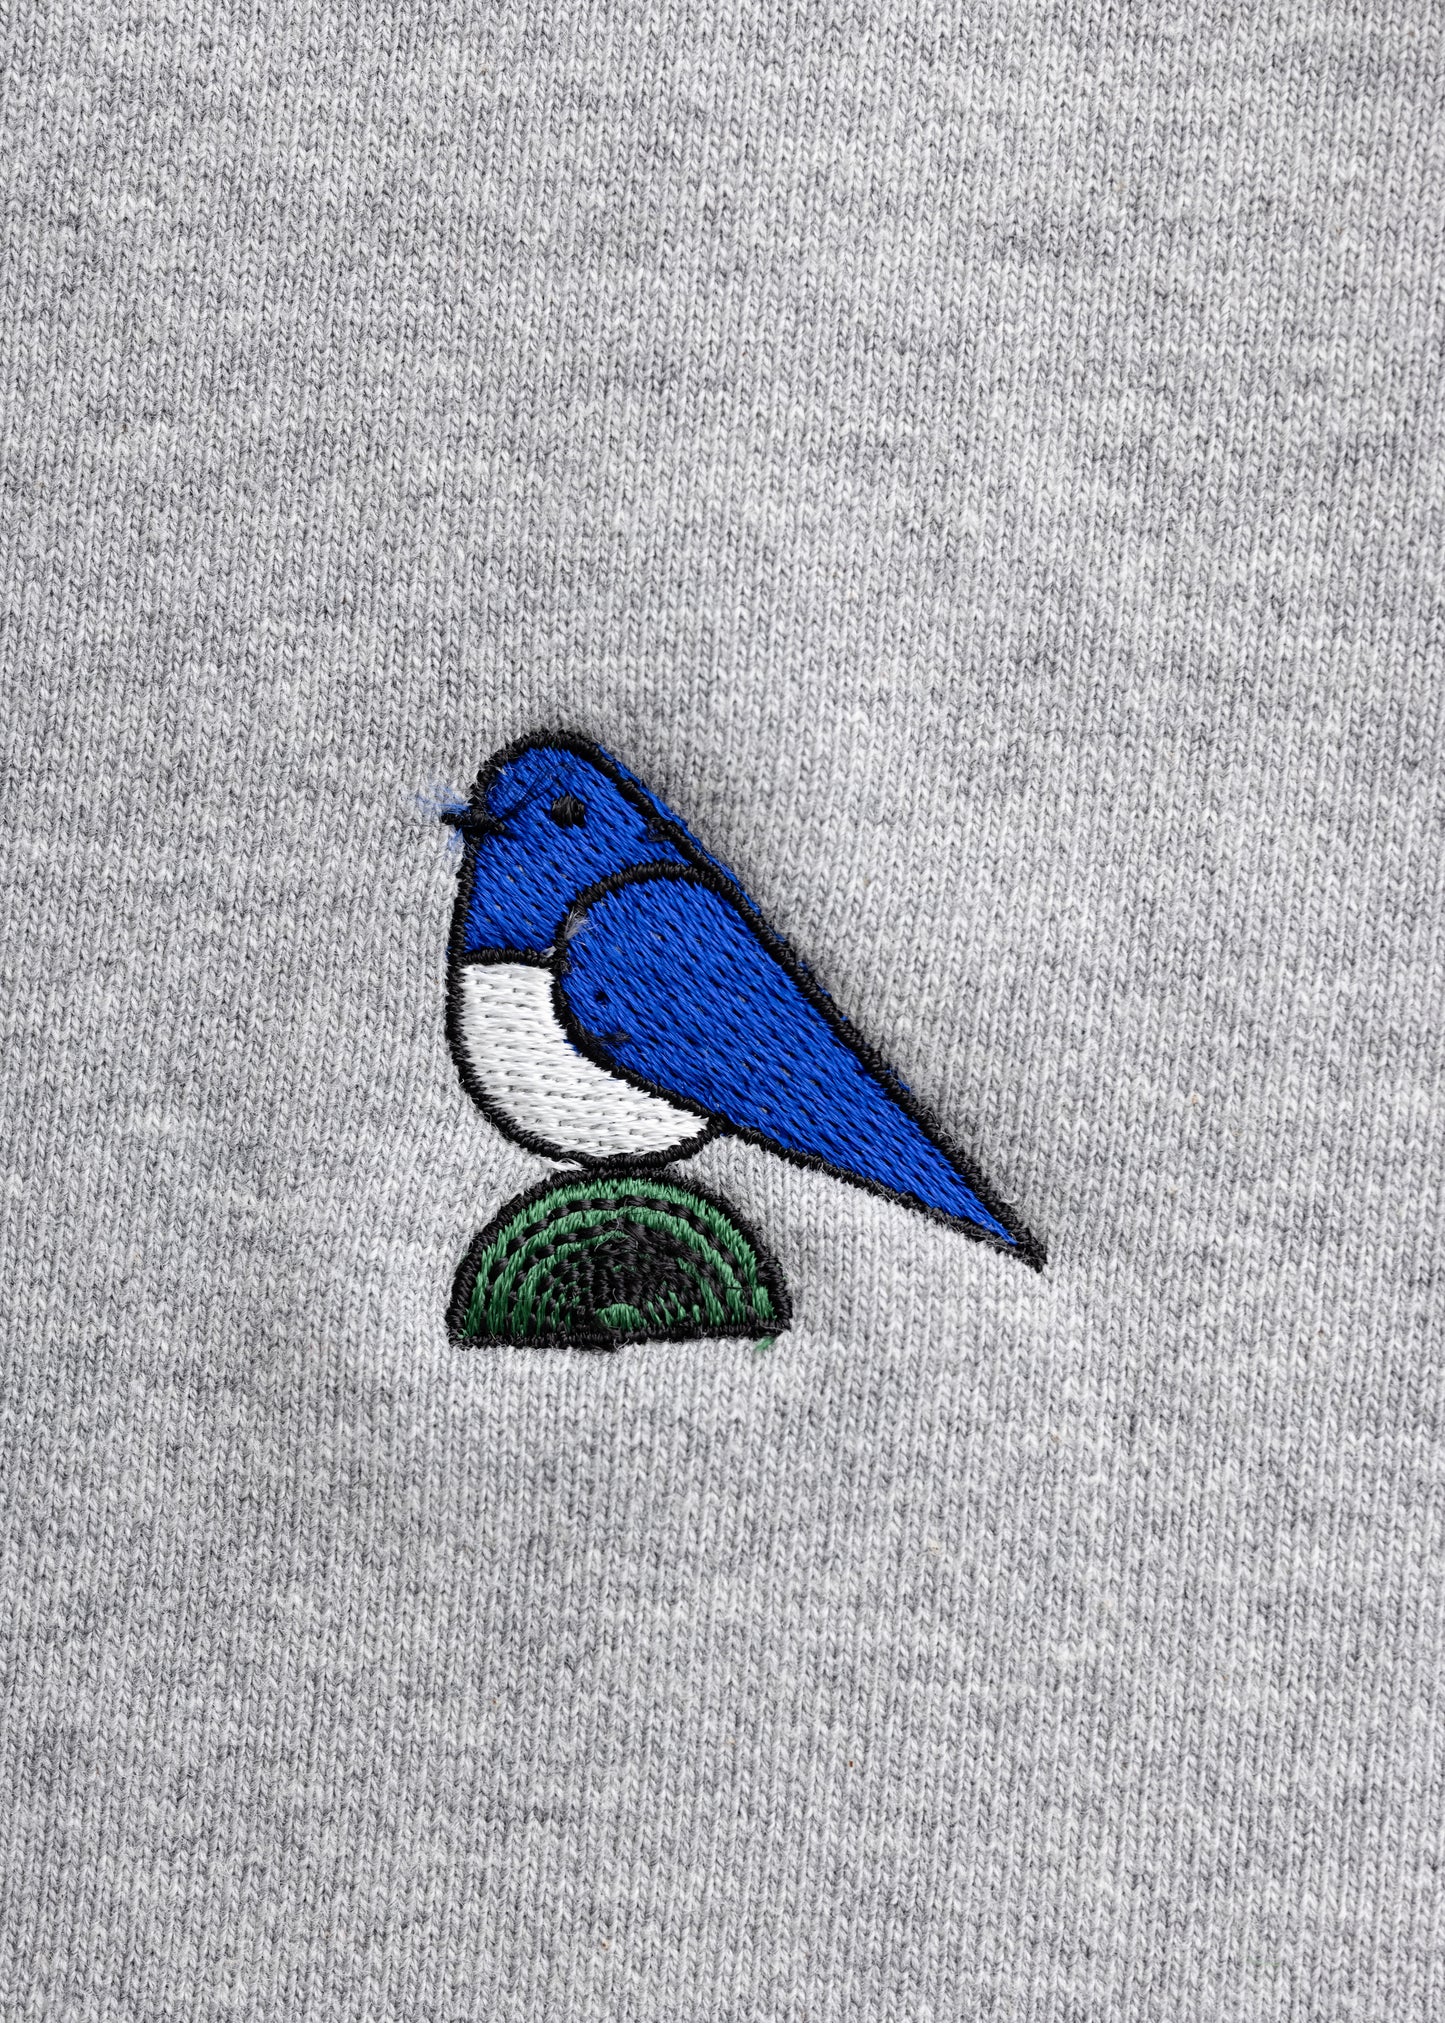 [ HAM IAM ] Fieldnotes " OORURI mini embroidery オオルリ刺繍小 " classic athletic sweat shirt c/# yarn dyed grey